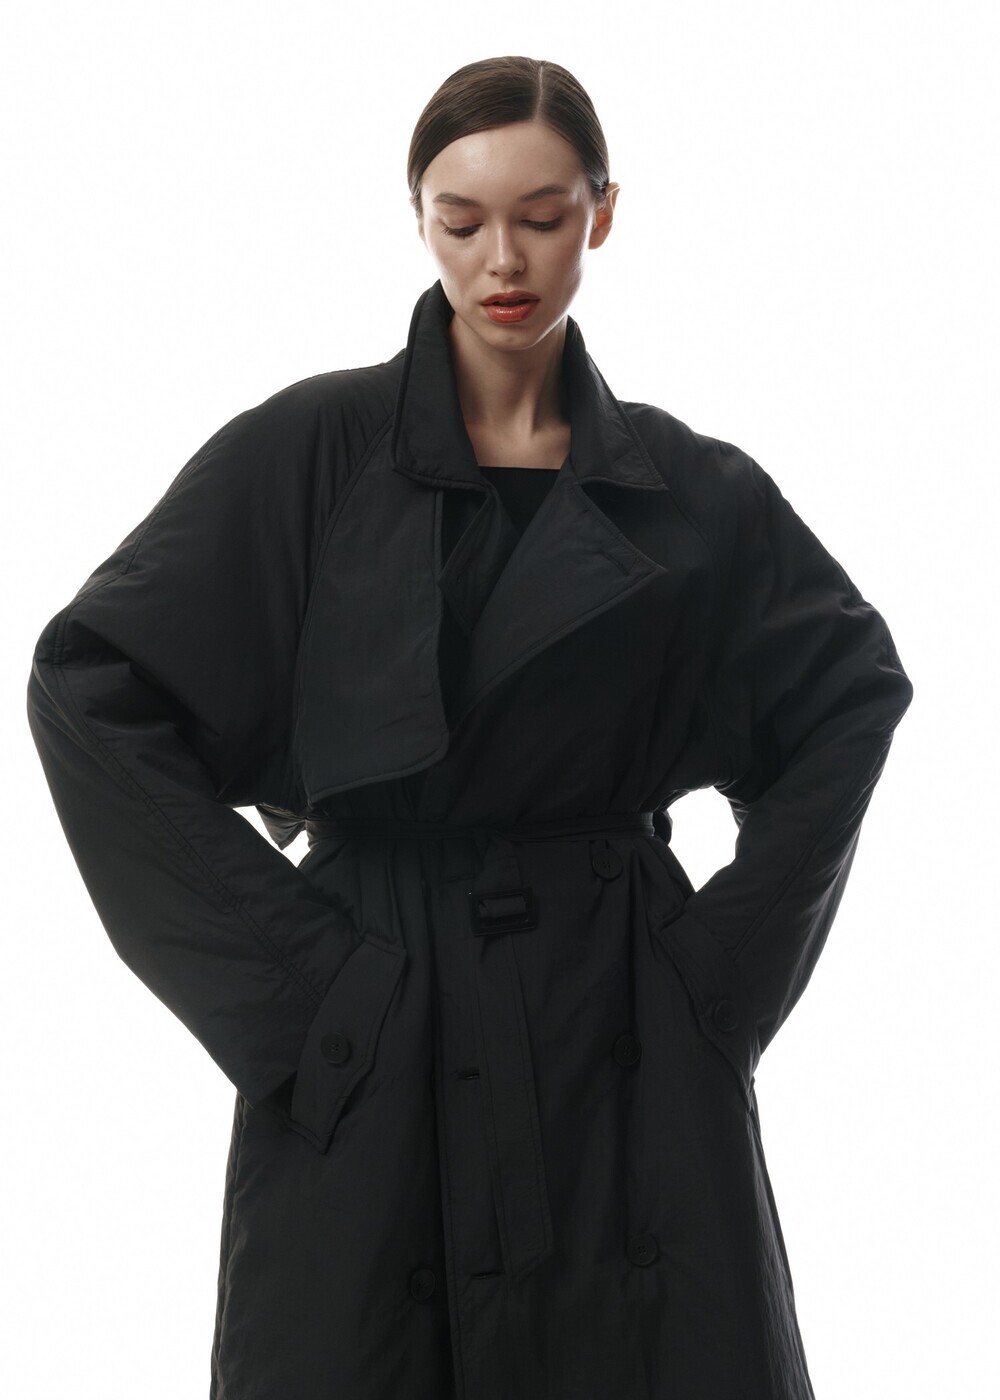 Insulated raincoat in black